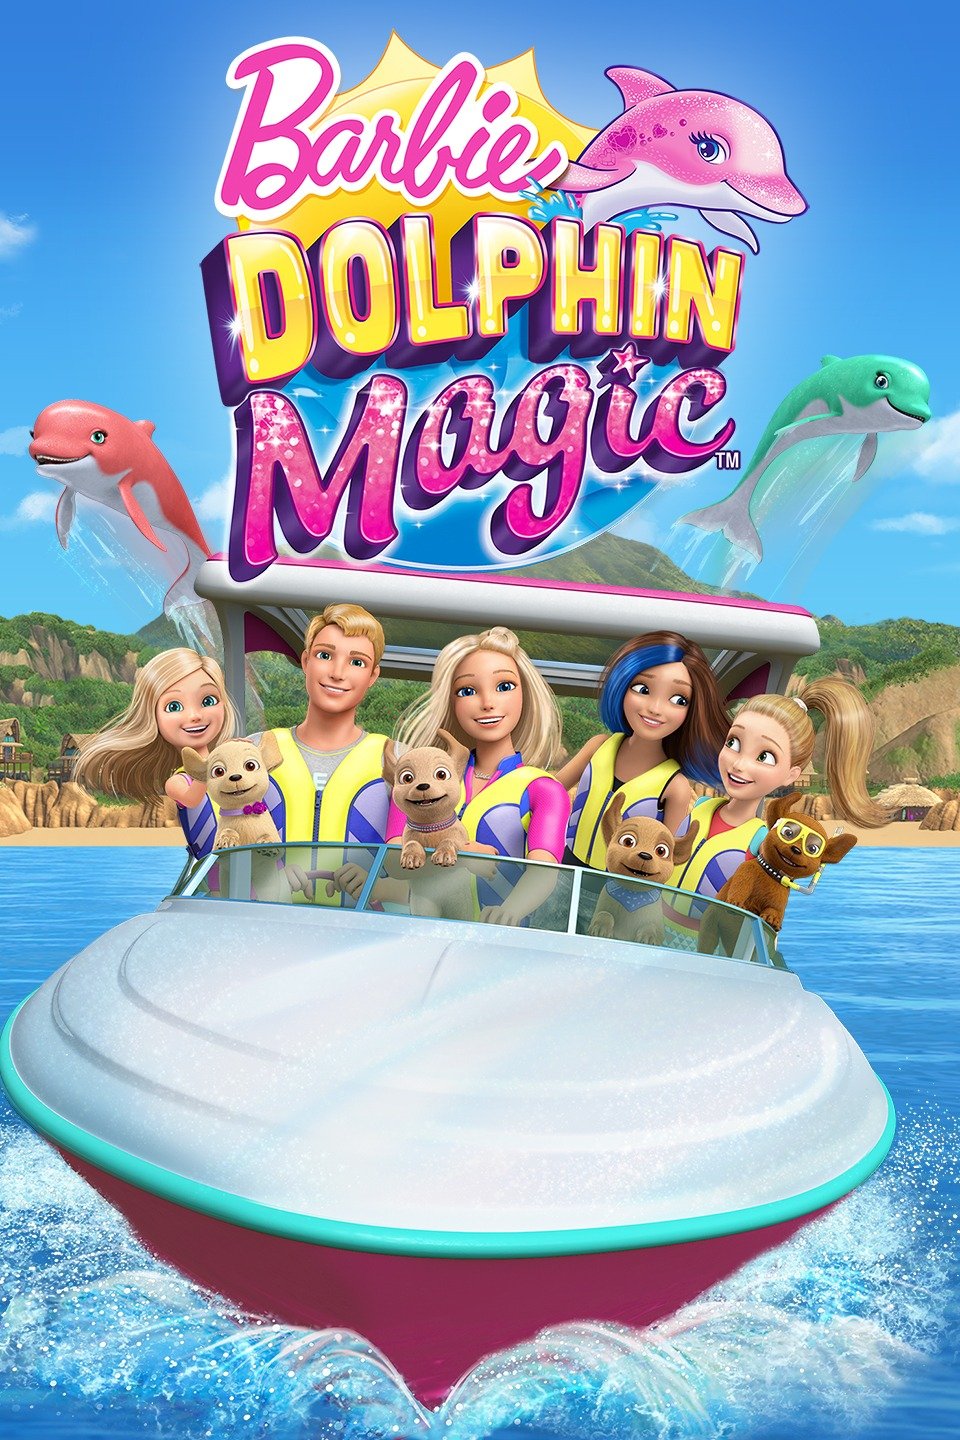 [MINI-HD] Barbie: Dolphin Magic (2017) บาร์บี้™ โลมา มหัศจรรย์ [Netflix] [1080p] [พากย์ไทย 2.0 + เสียงอังกฤษ DD5.1] [WEBRip.x264] [บรรยายอังกฤษ] [พากย์ไทย] [ONE2UP]